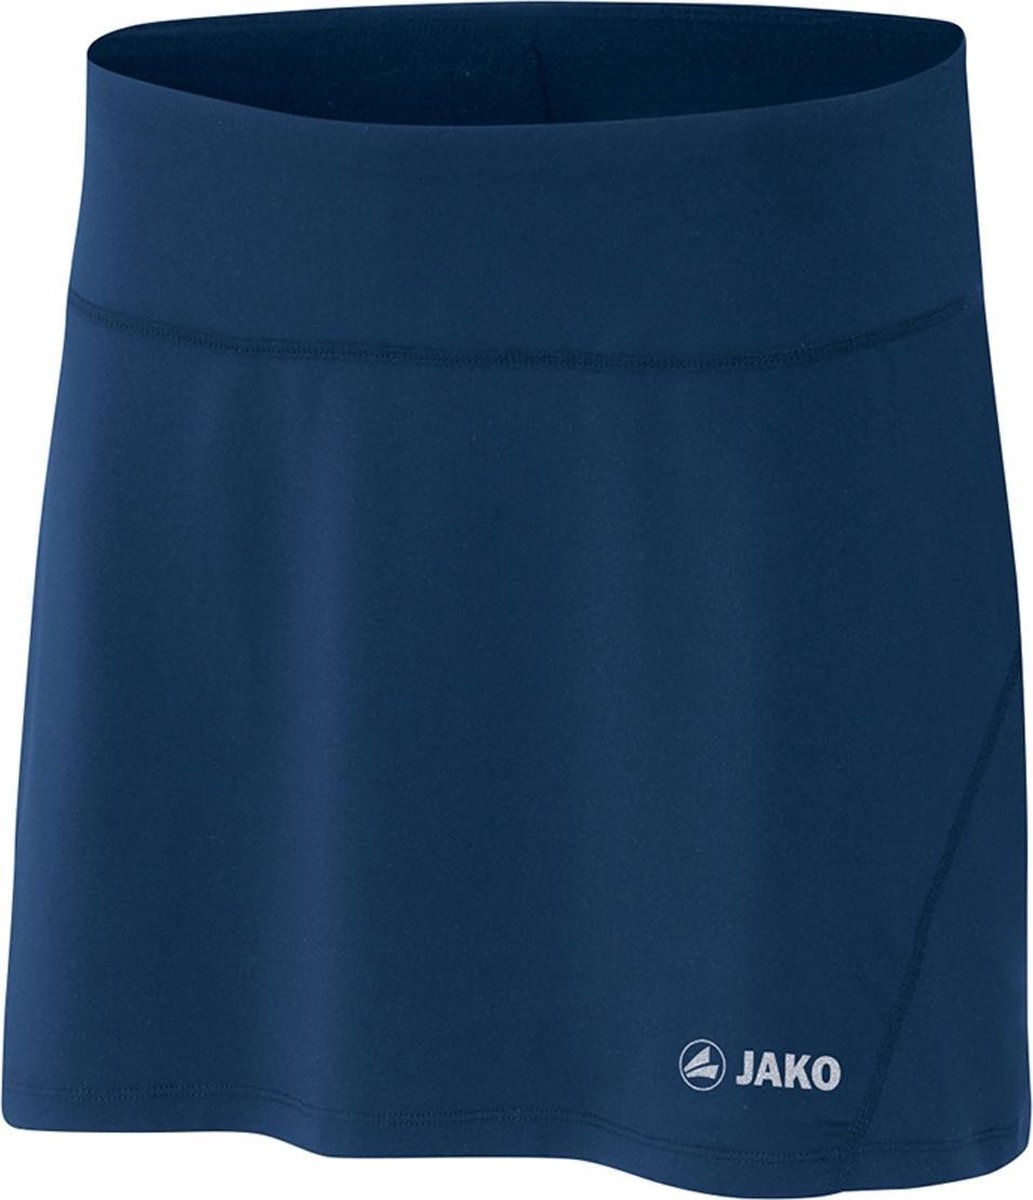 Jako - Skirt Basic - Rok Basic - 3XS - Blauw